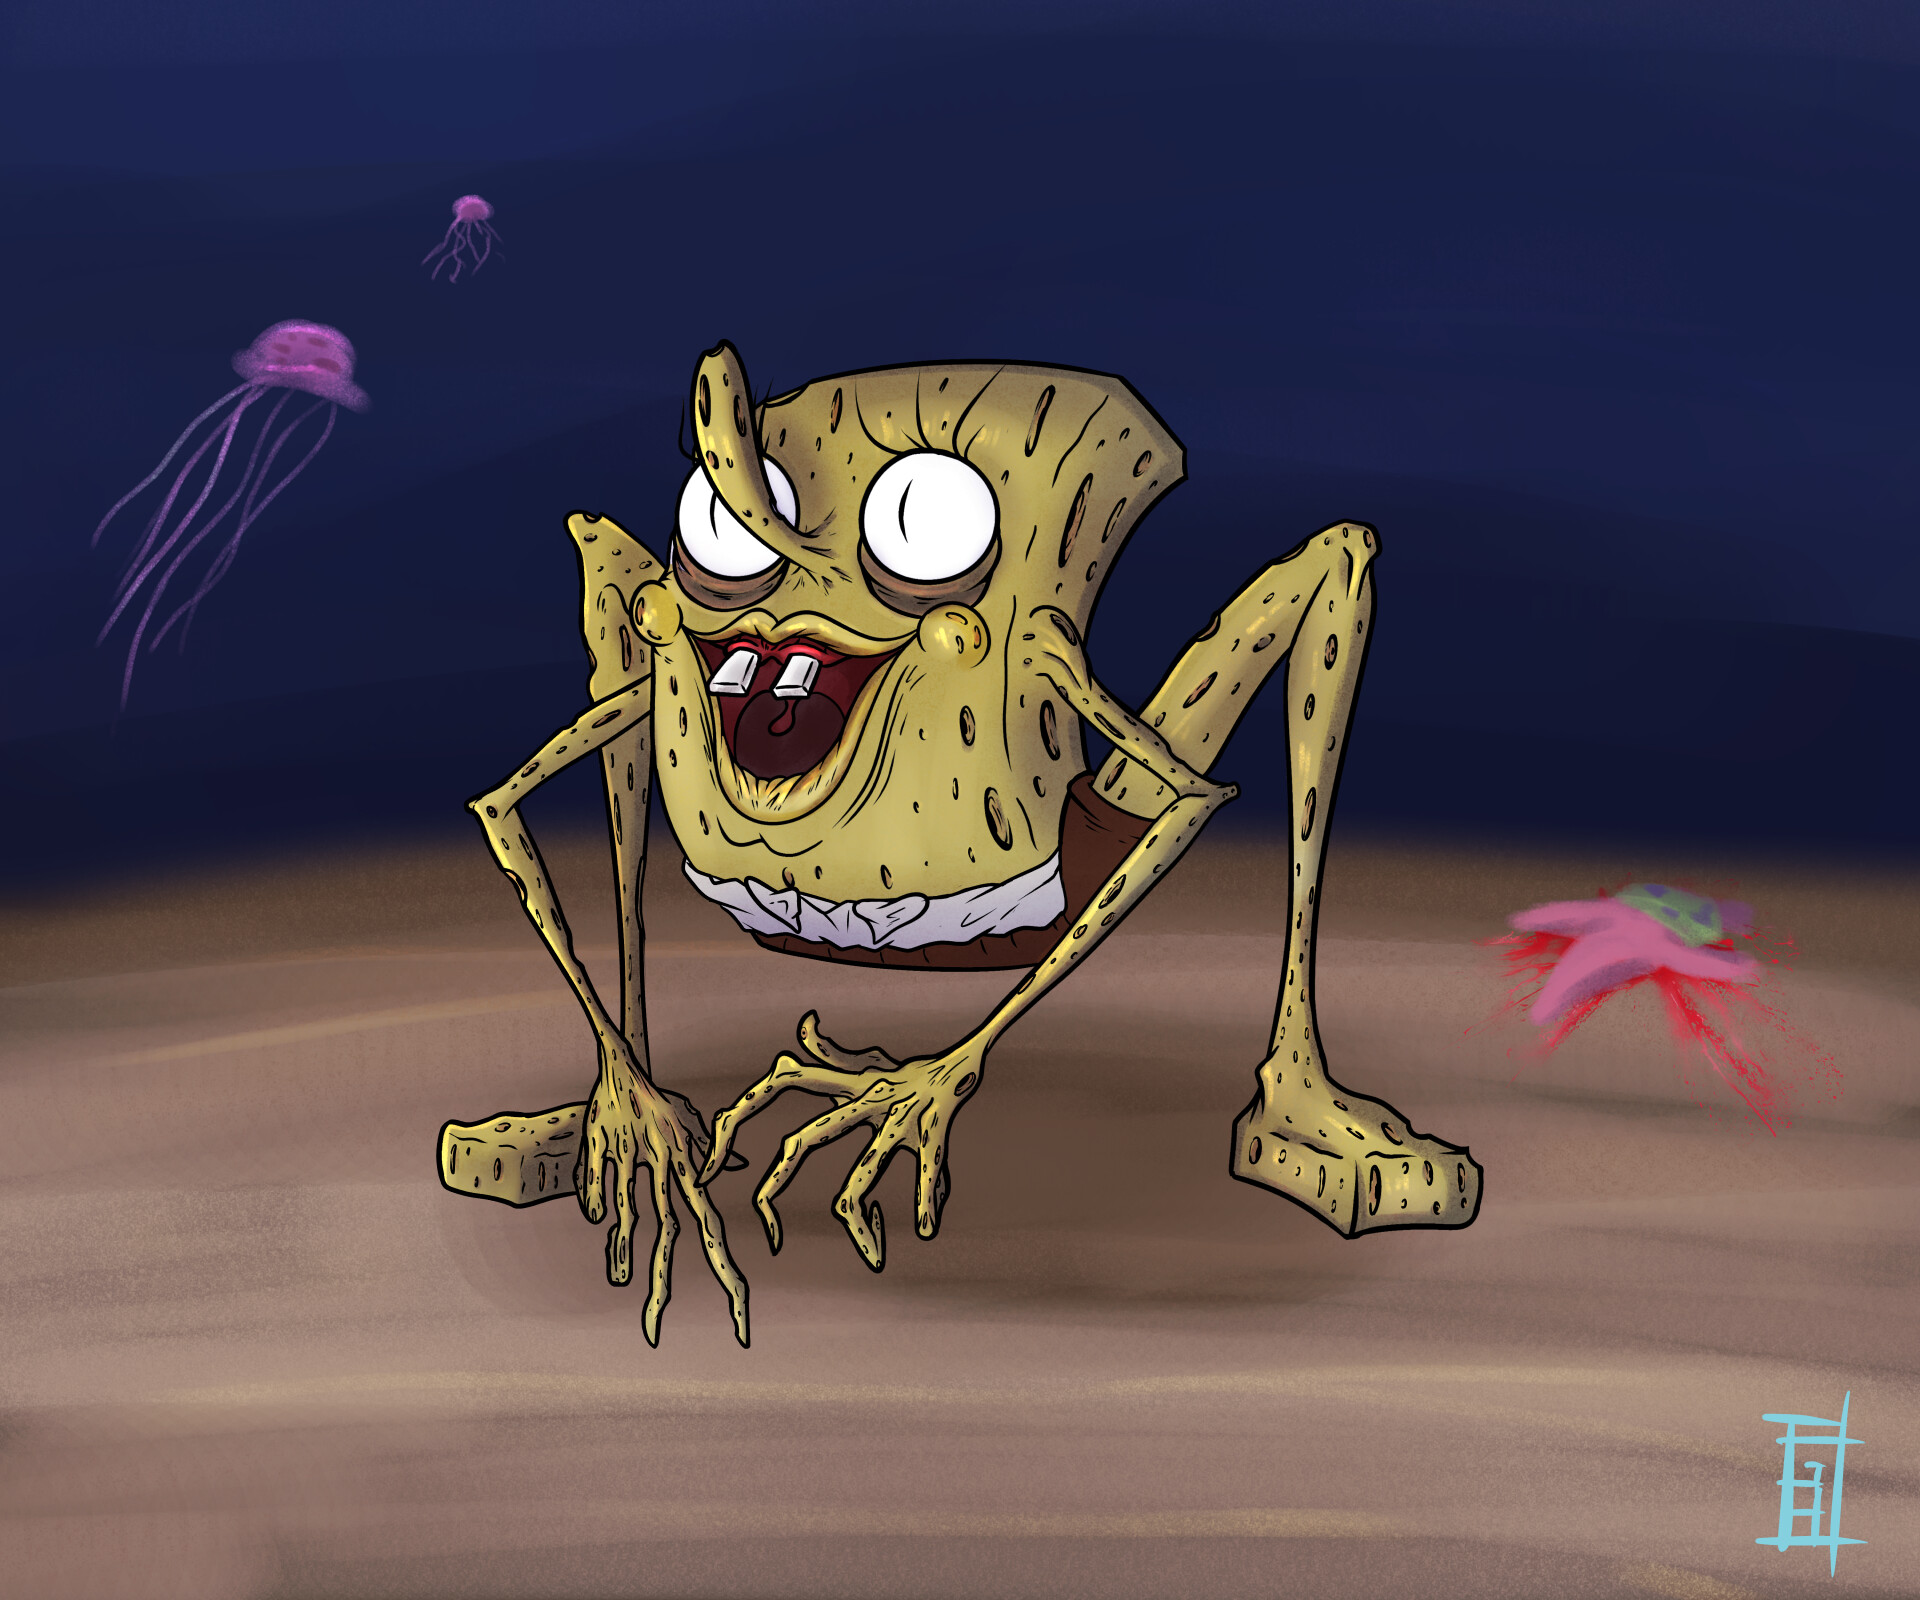 Spongebob horror. Scary Spongebob Killed.